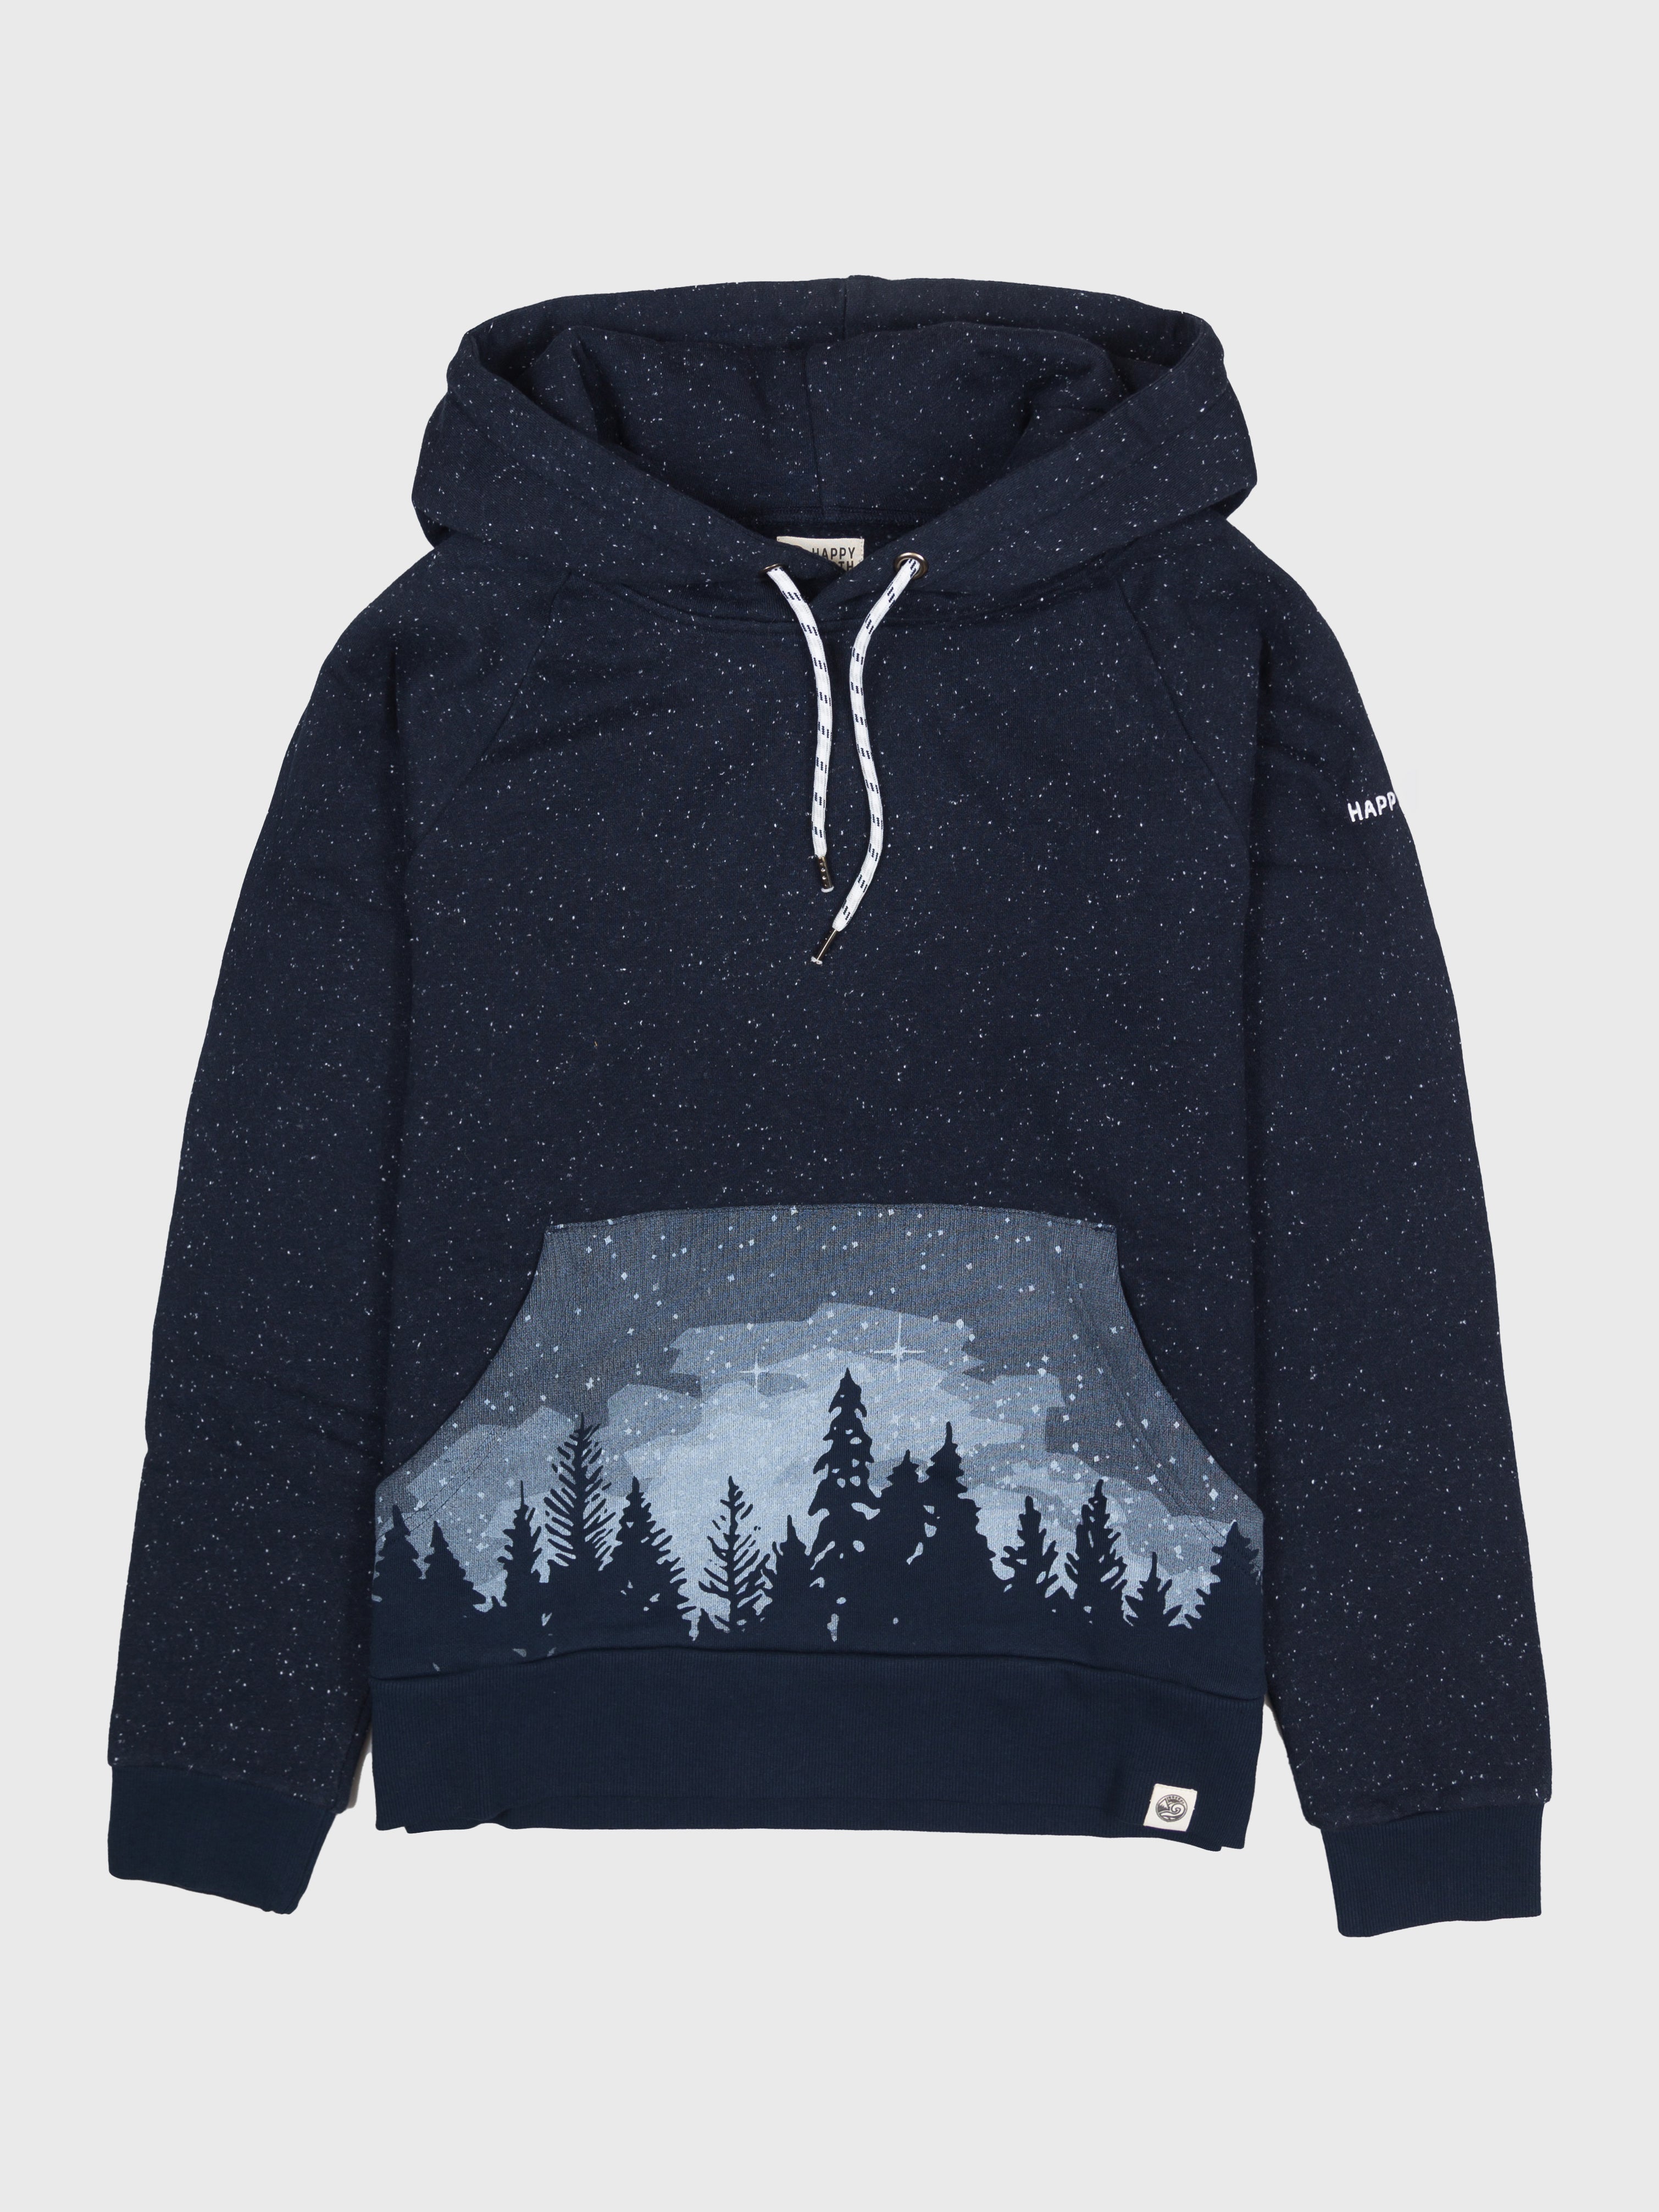 All-Gender Starlit Night Organic Fleece Hoodie Sweatshirt - Navy XL